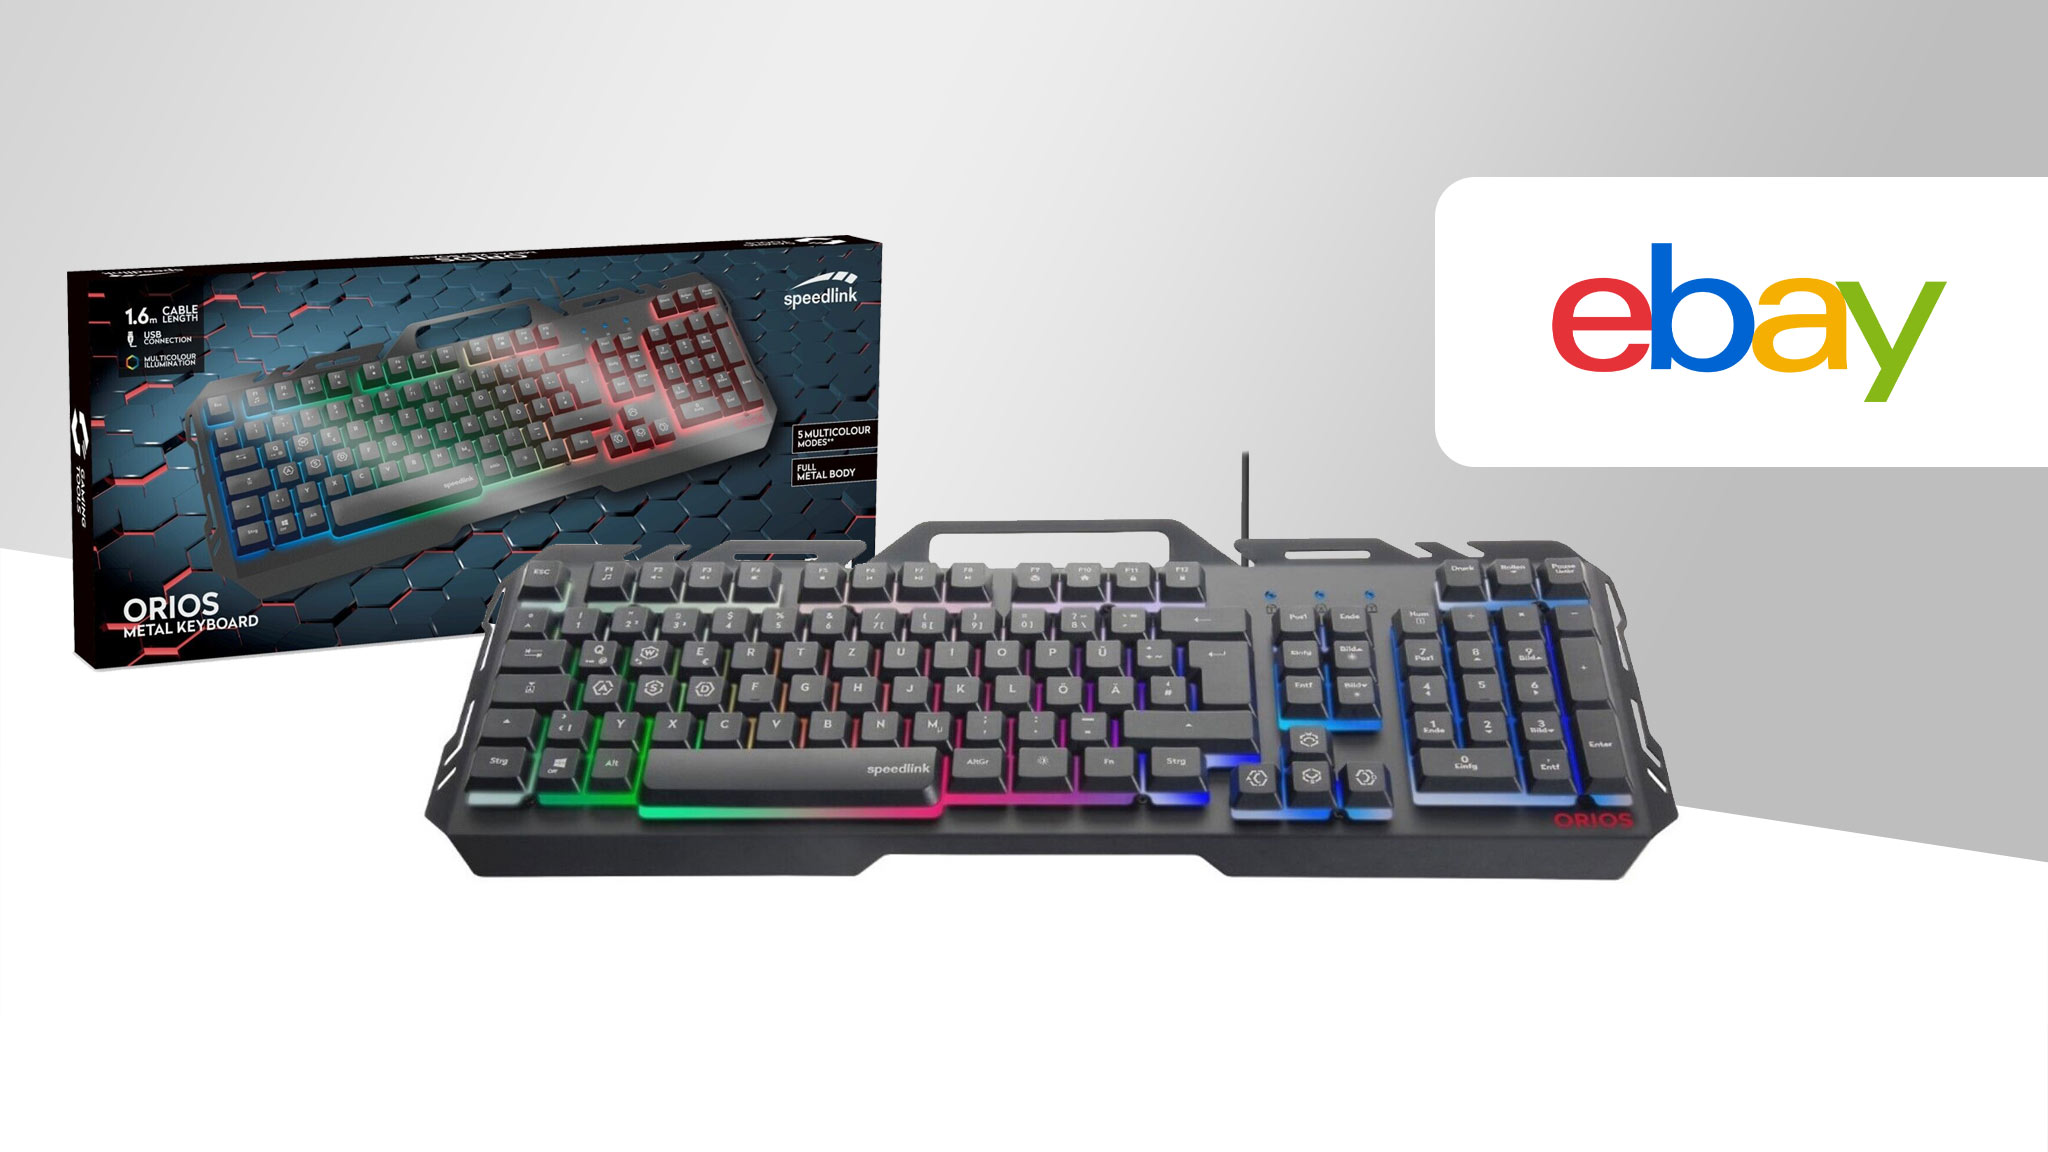 Ebay deal: Speedlink gaming keyboard for only 13 euros!